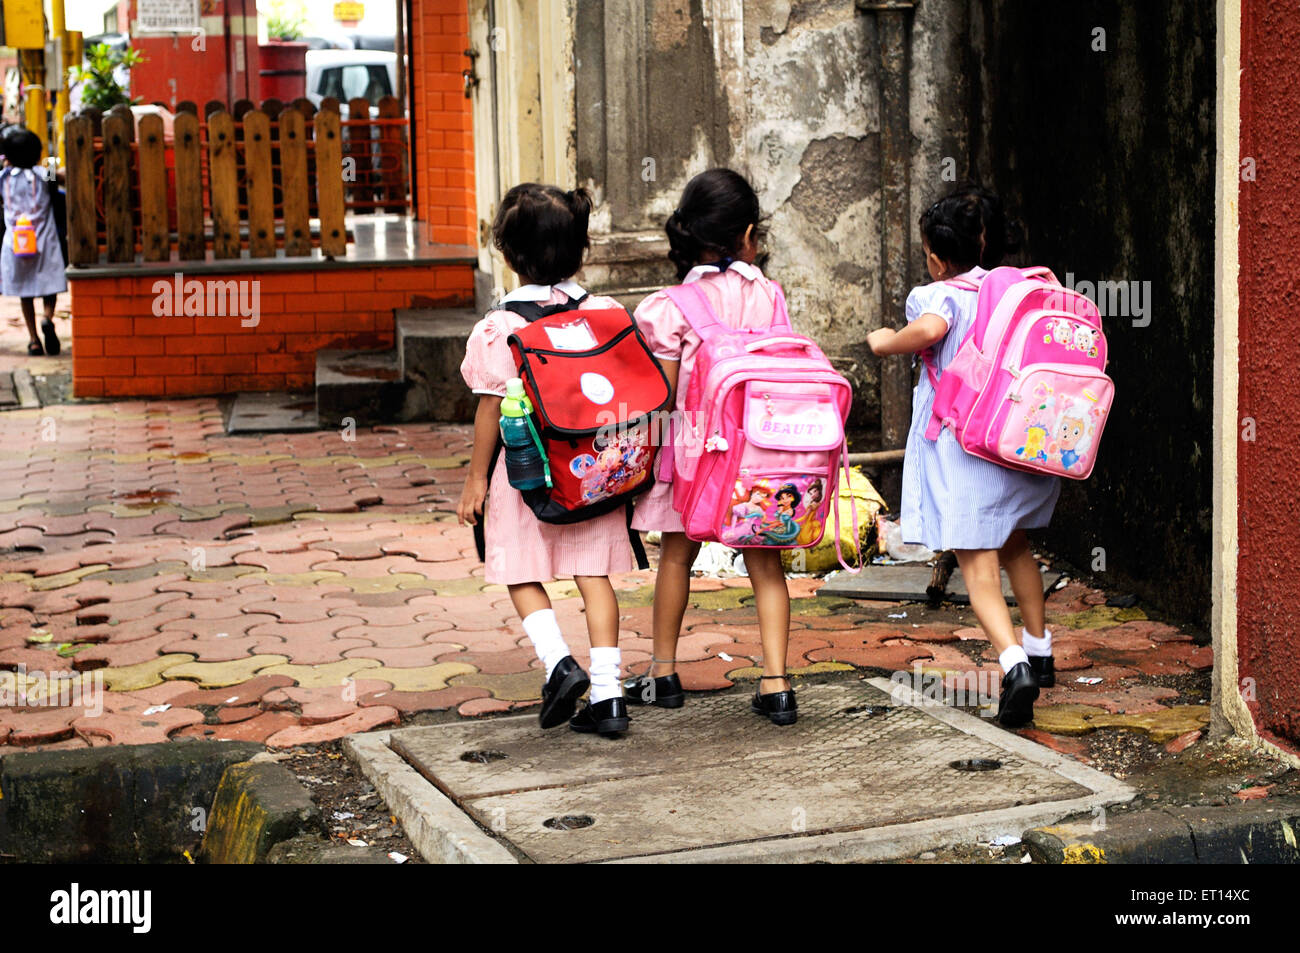 Children going to school ; India - pkb 176895 Stock Photo